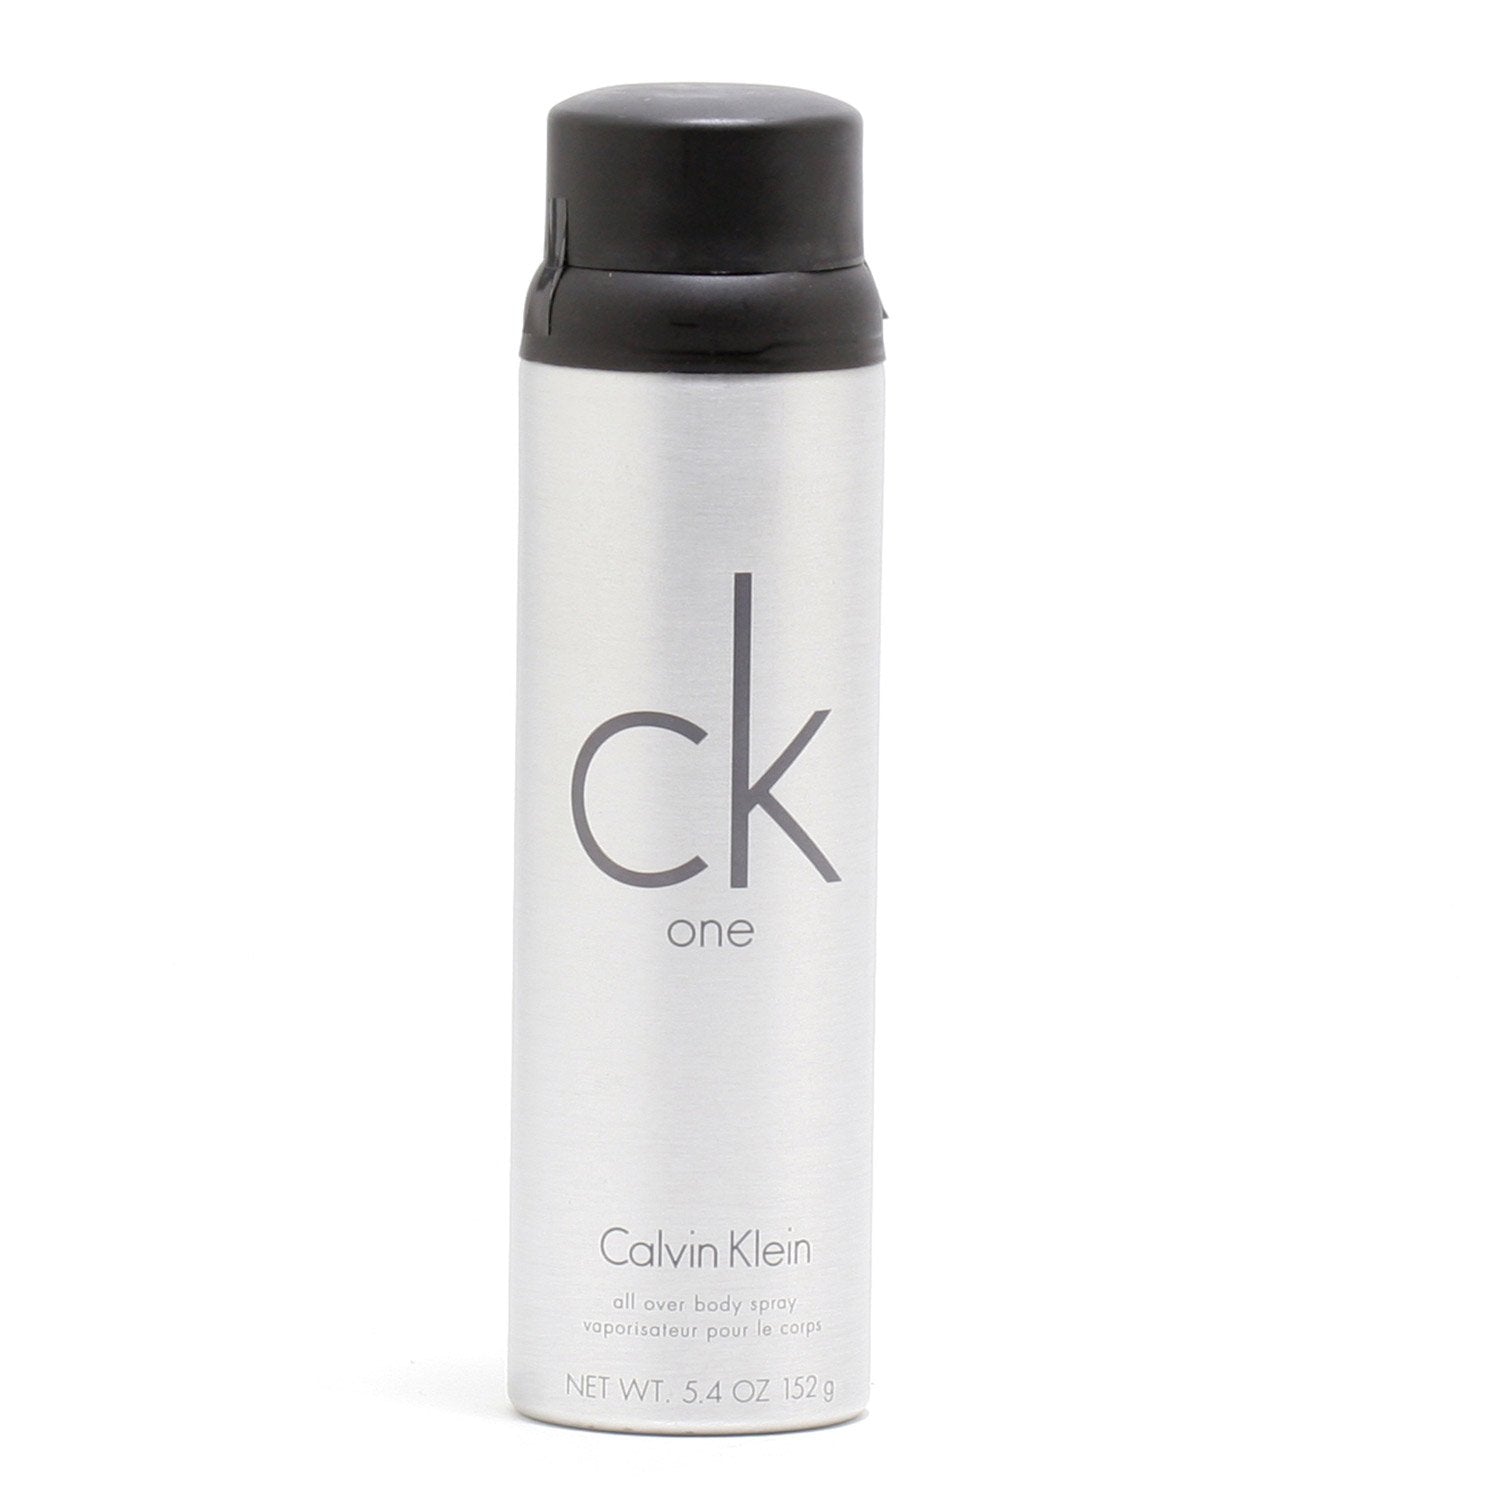 CK ONE BY CALVIN KLEIN UNISEX- BODY SPRAY,  OZ – Fragrance Room